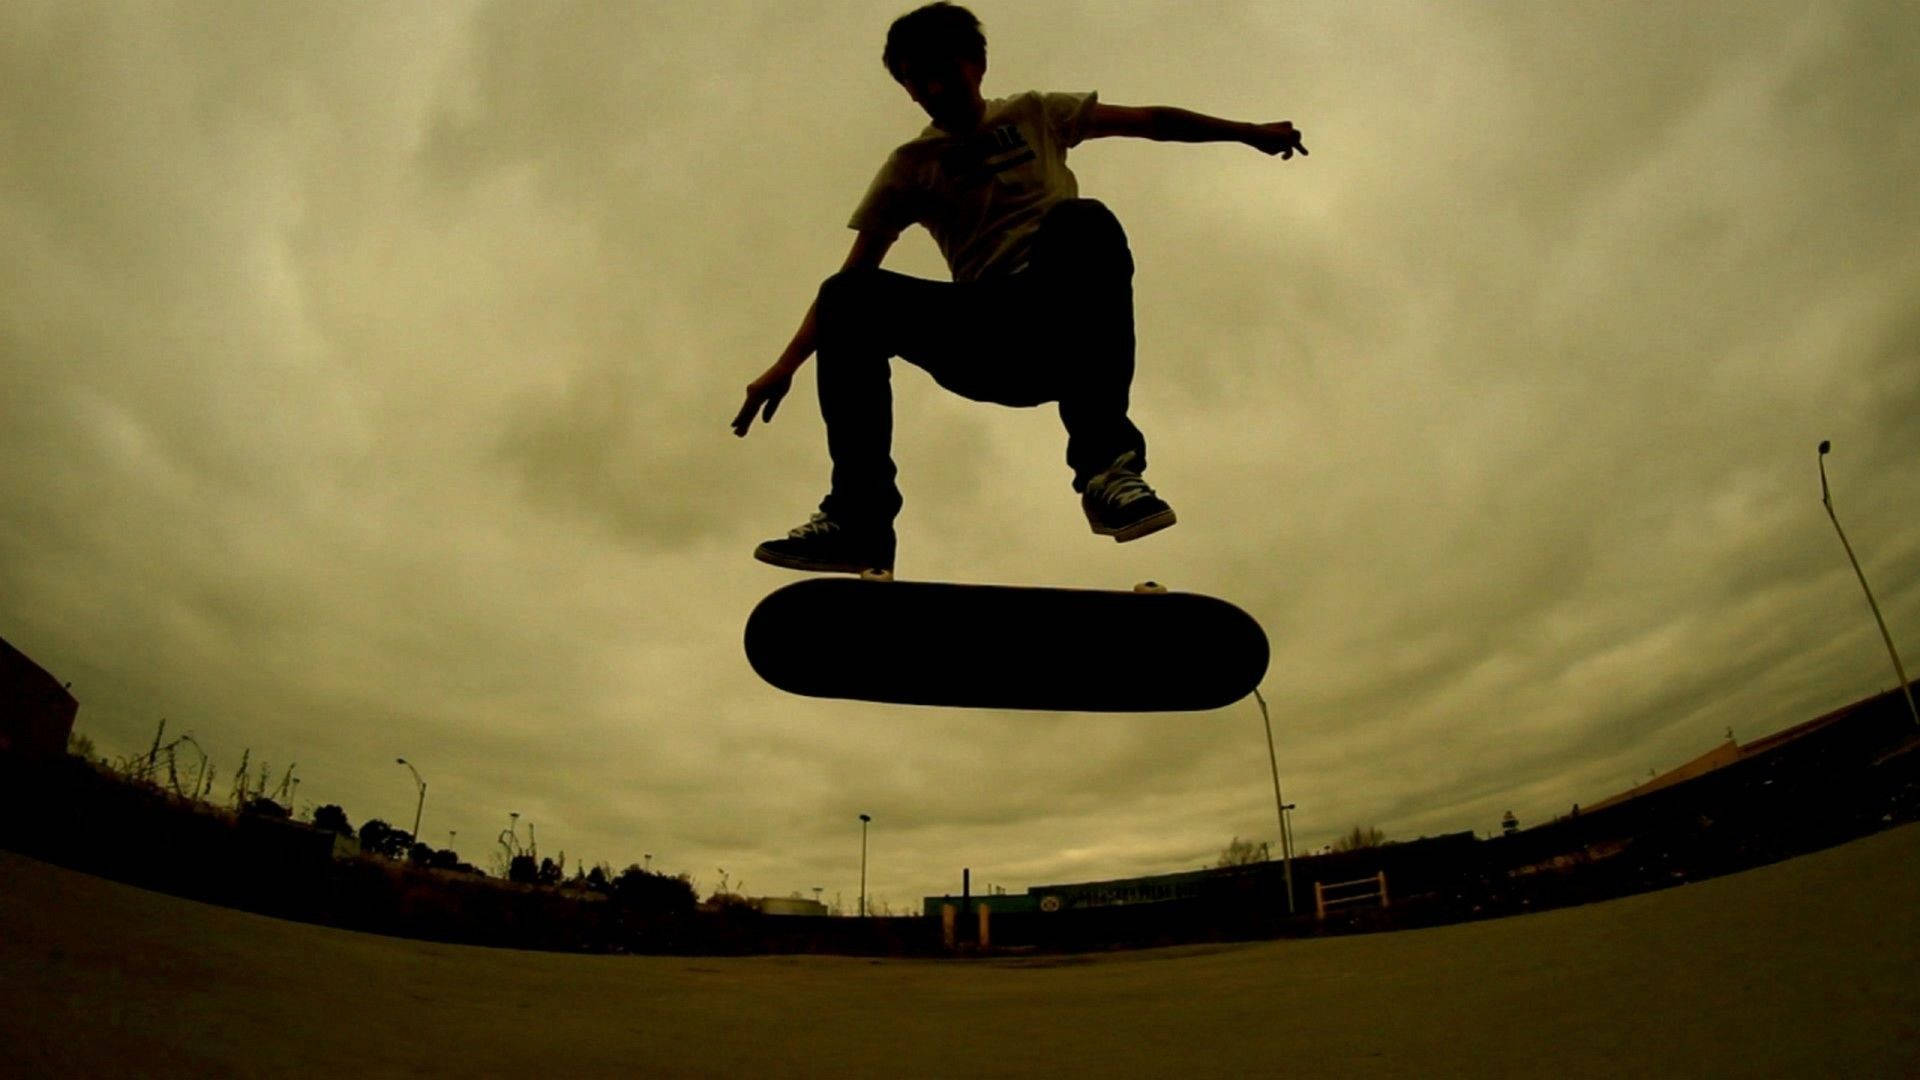 Skateboard Jump Silhouette Wide Angle Wallpaper